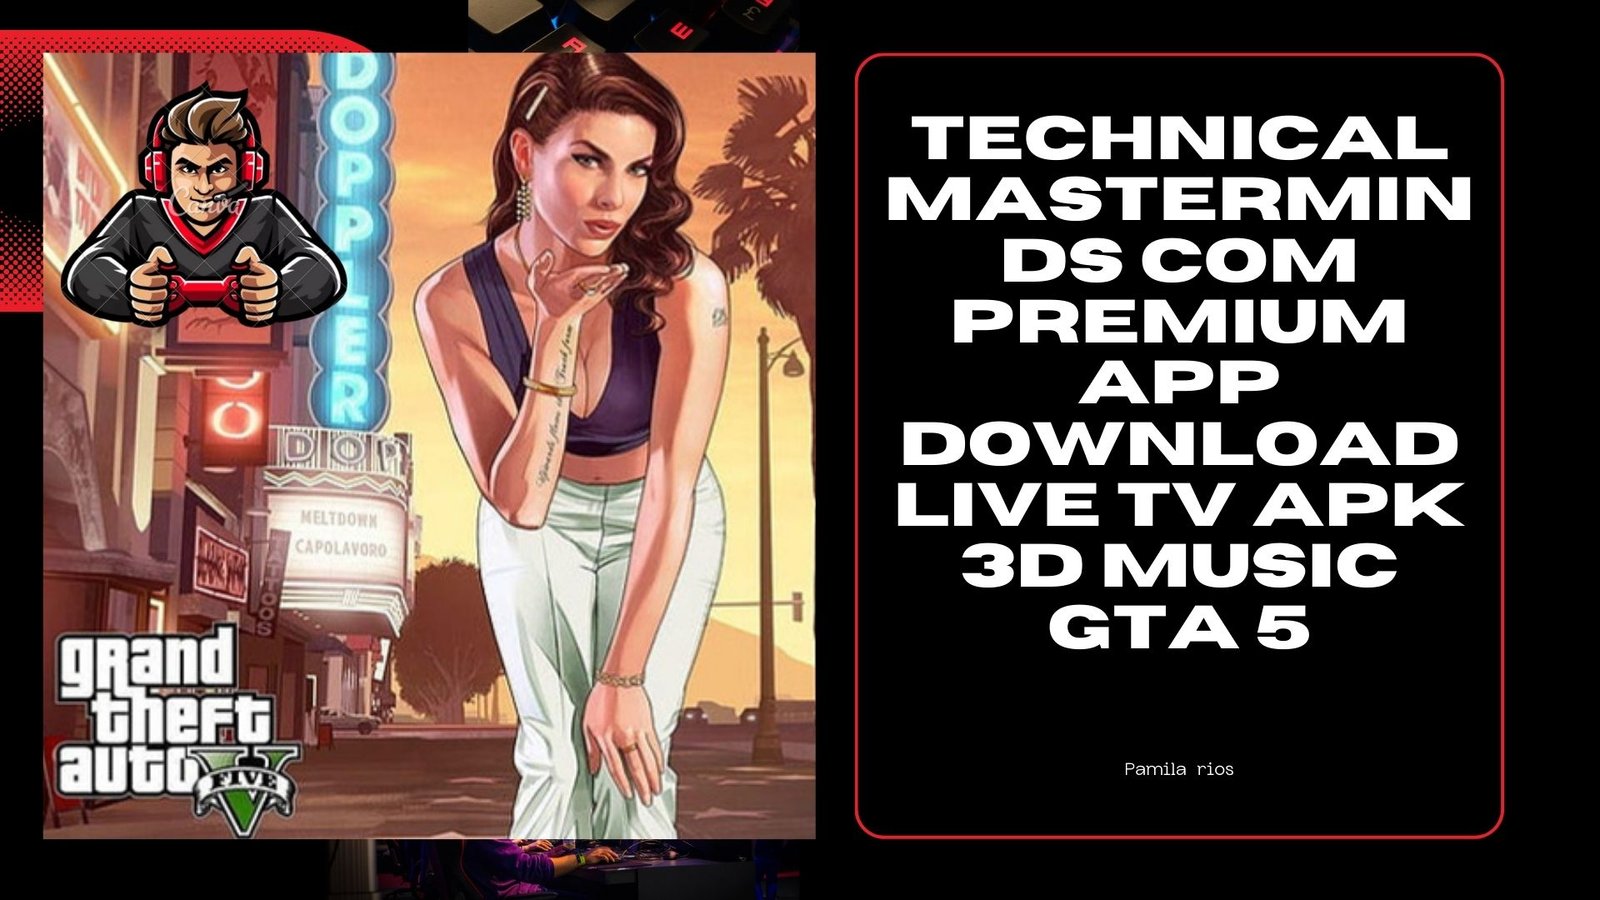 technical masterminds com premium app download live tv apk 3d music gta 5